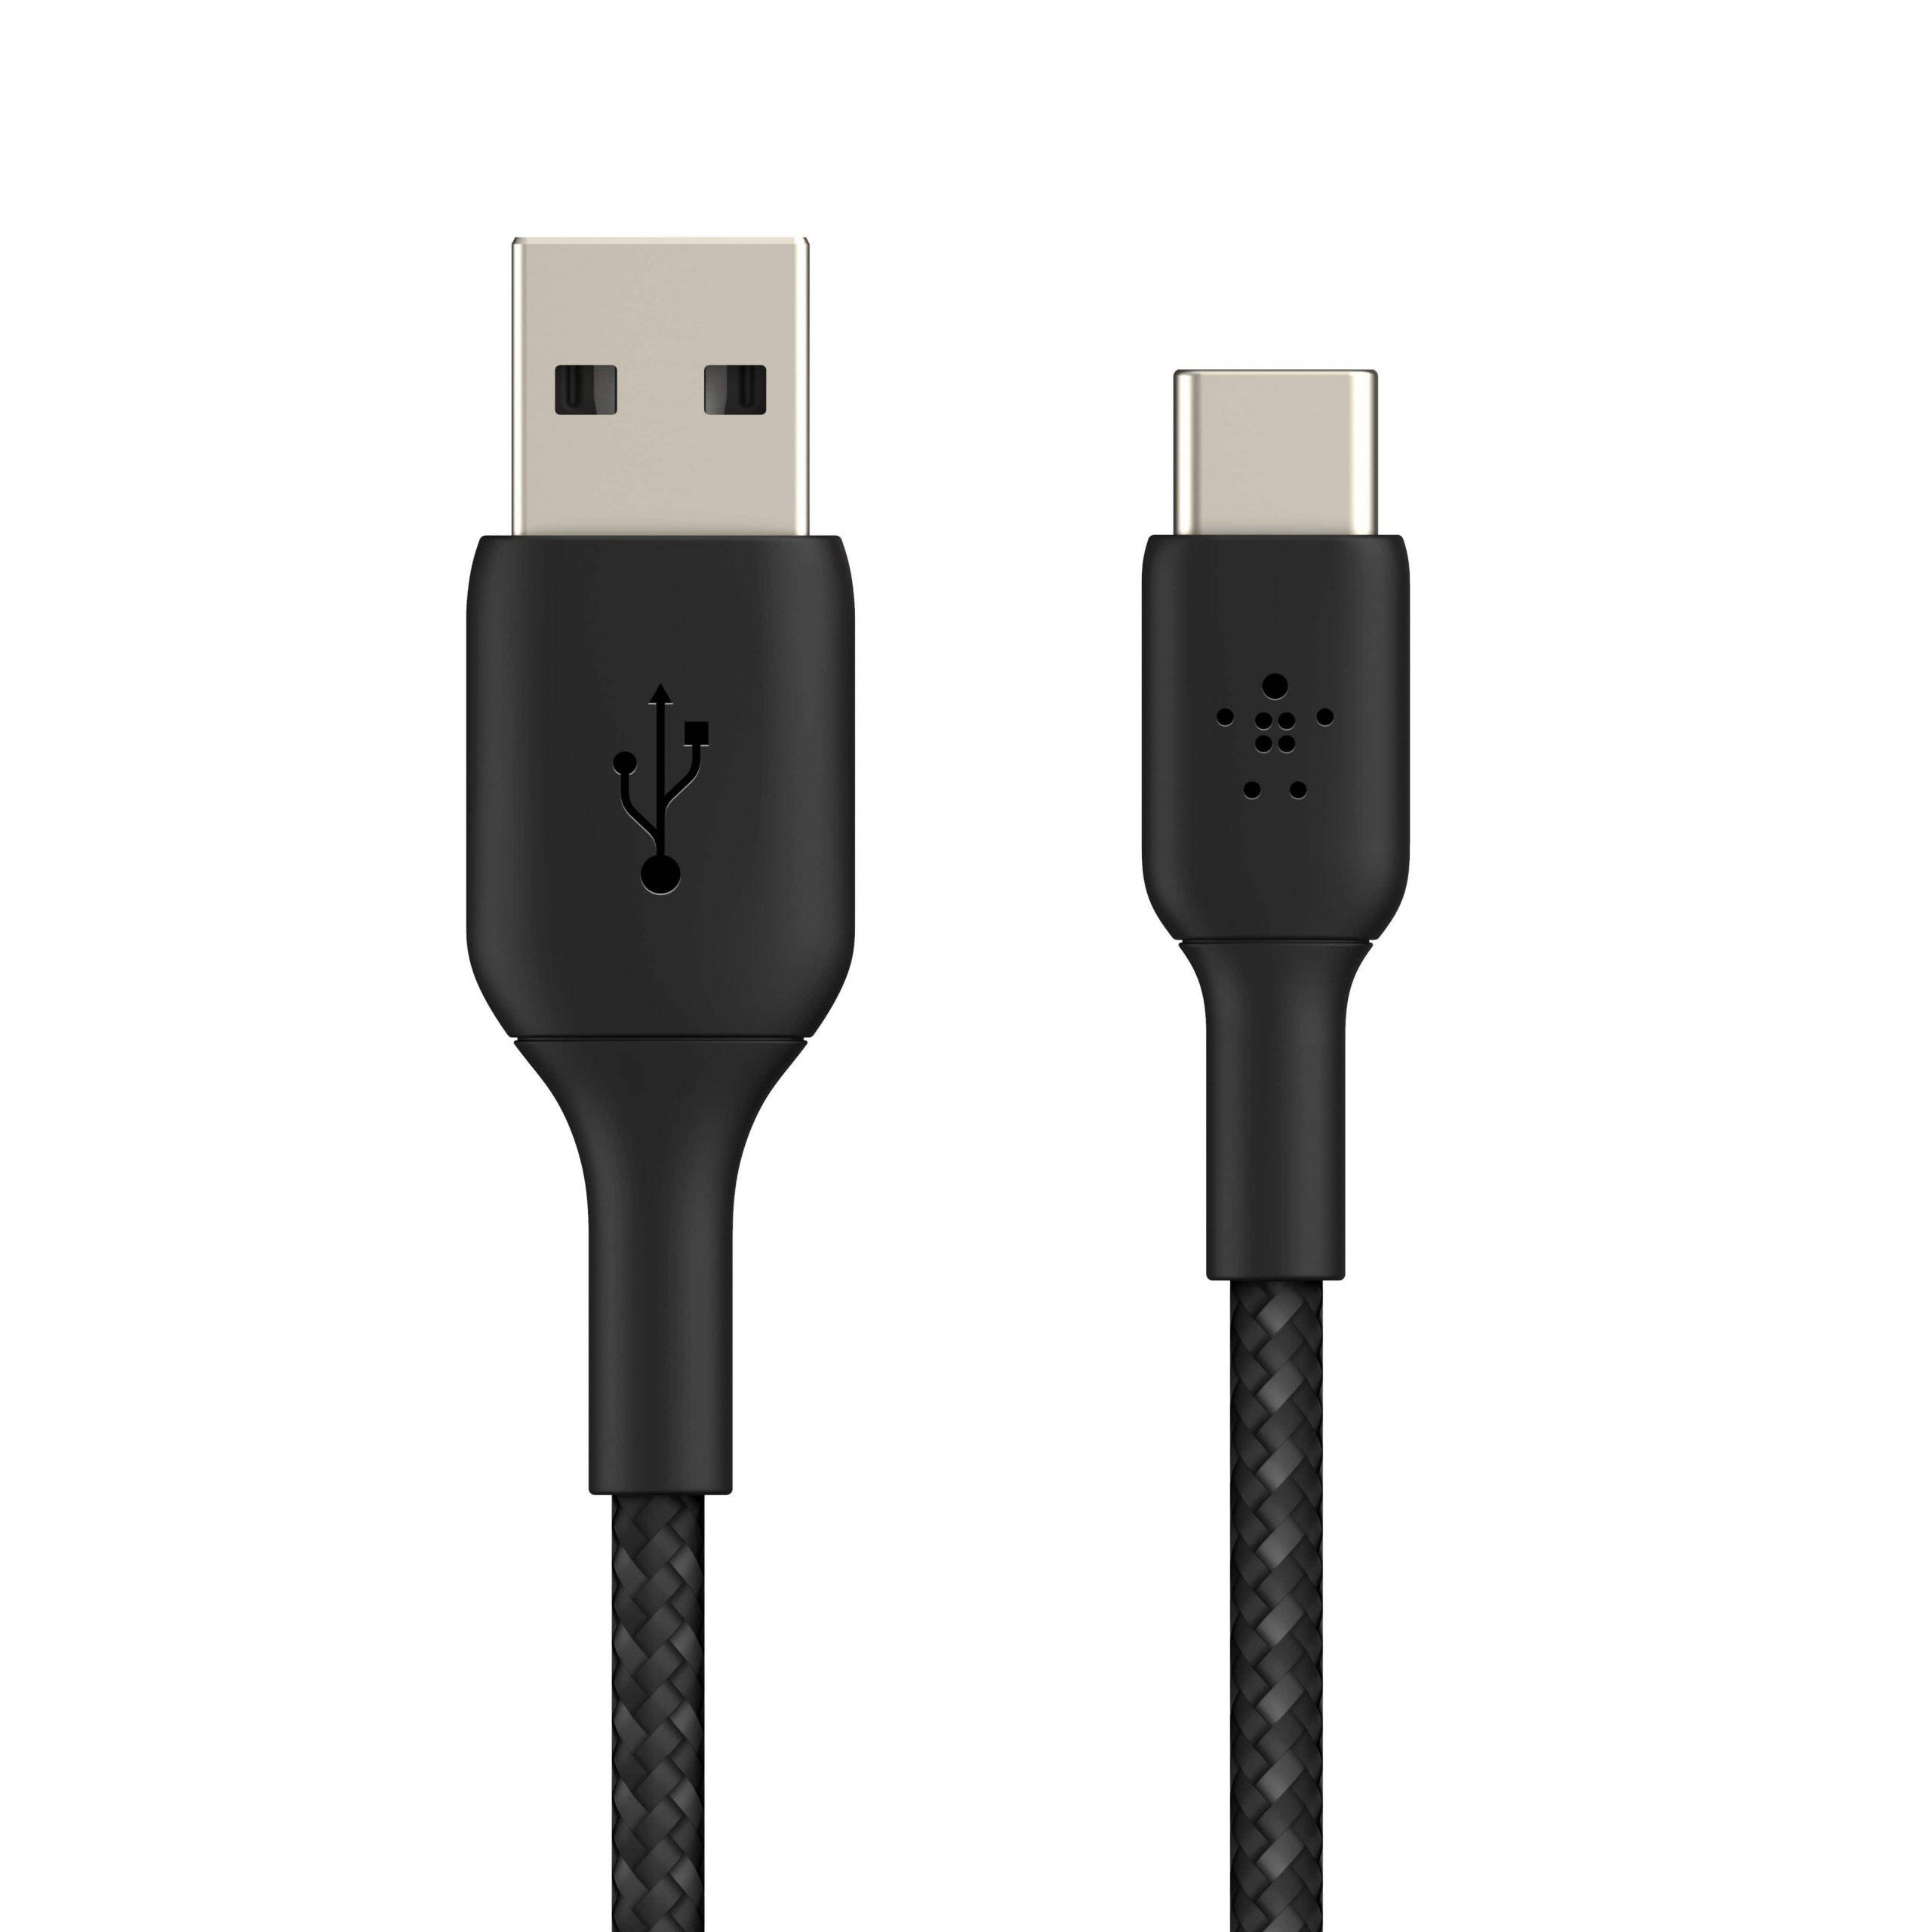 وصلة شاحن (كيبل شحن) بمنفذ USB- C إلى USB-A لون أسود 2 متر Belkin - Boost Charge USB-C to USB-A Braided Cable 2Meter - Black - cG9zdDo1NTc4MA==